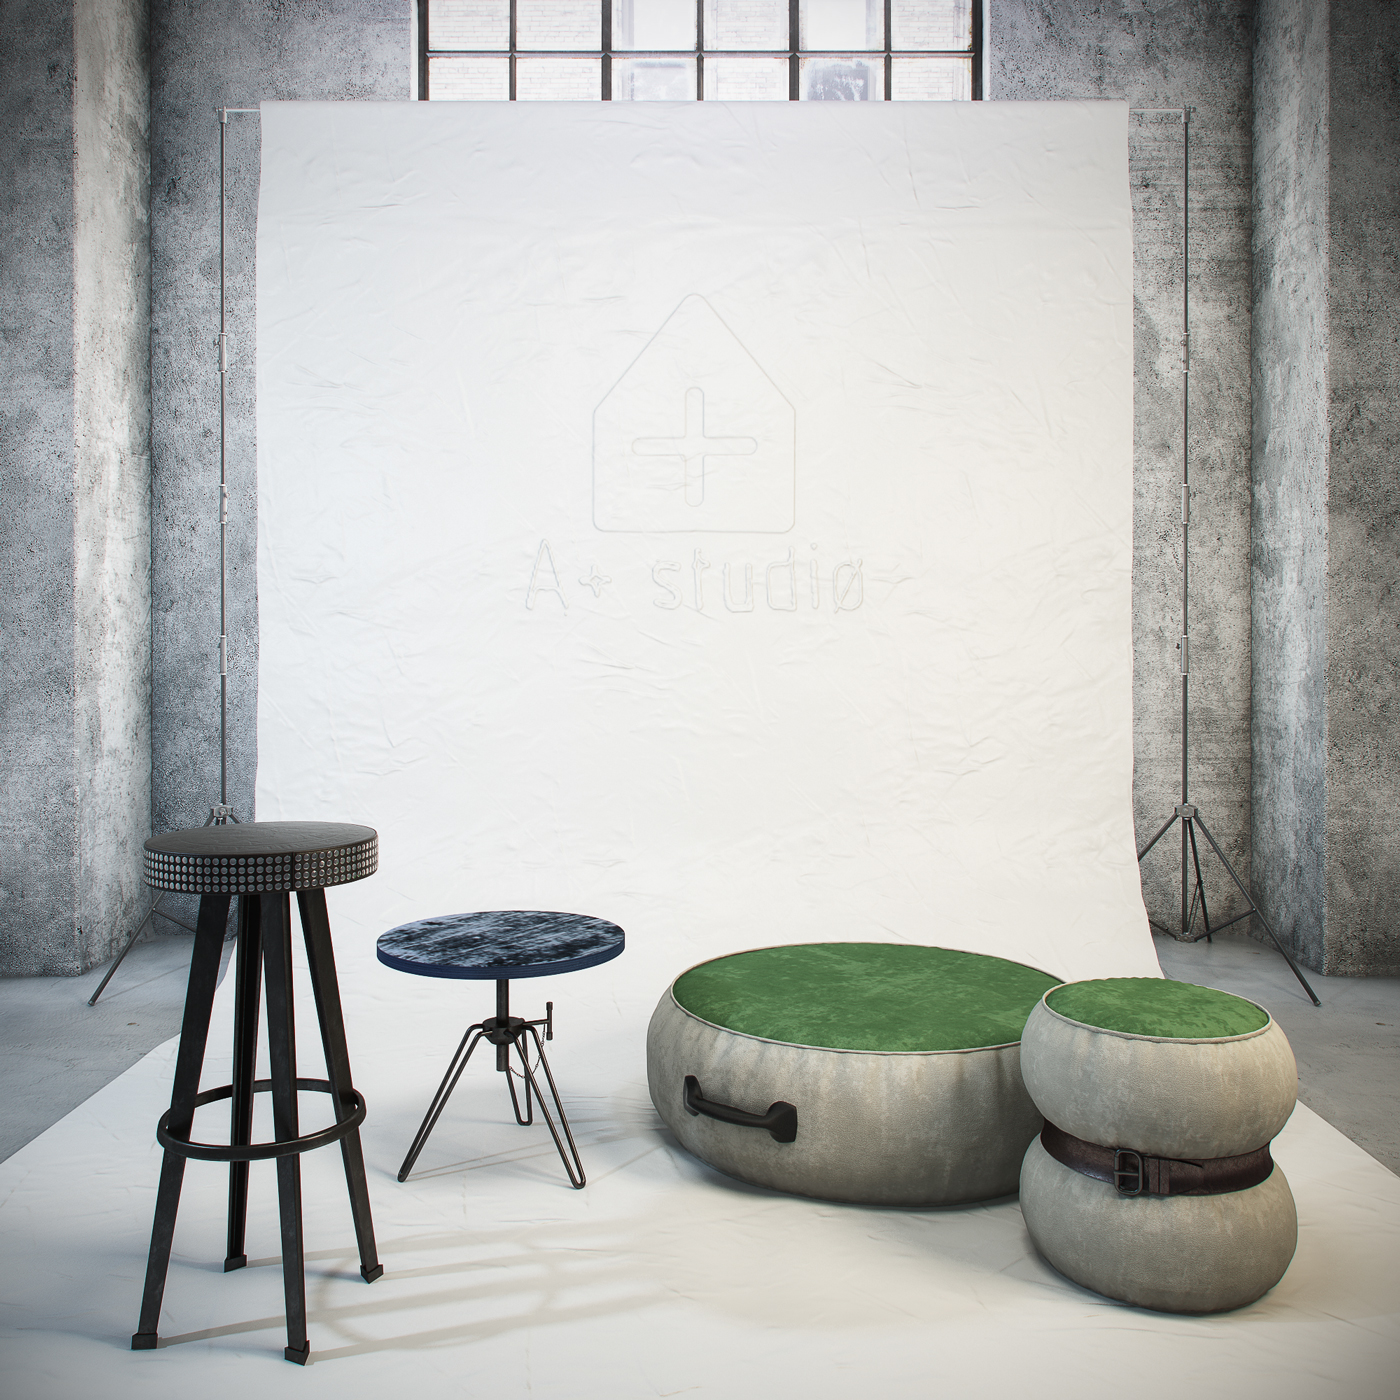 Diesel studio free 3d Models download furniture chair armchair pouf Moroso foscarini